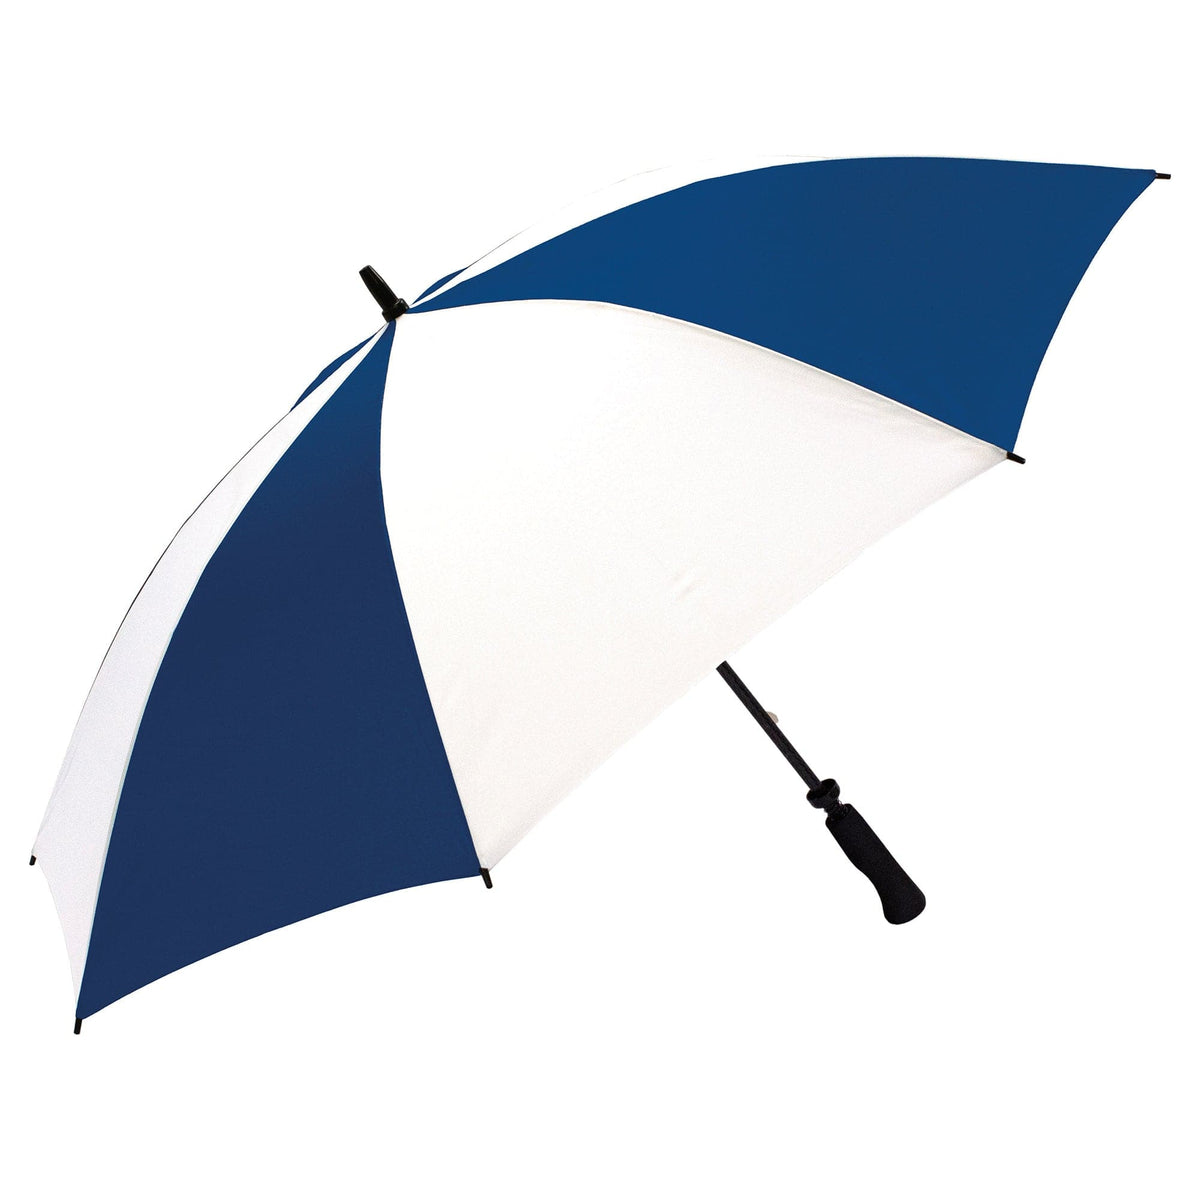 Haas-Jordan Olympia Umbrella